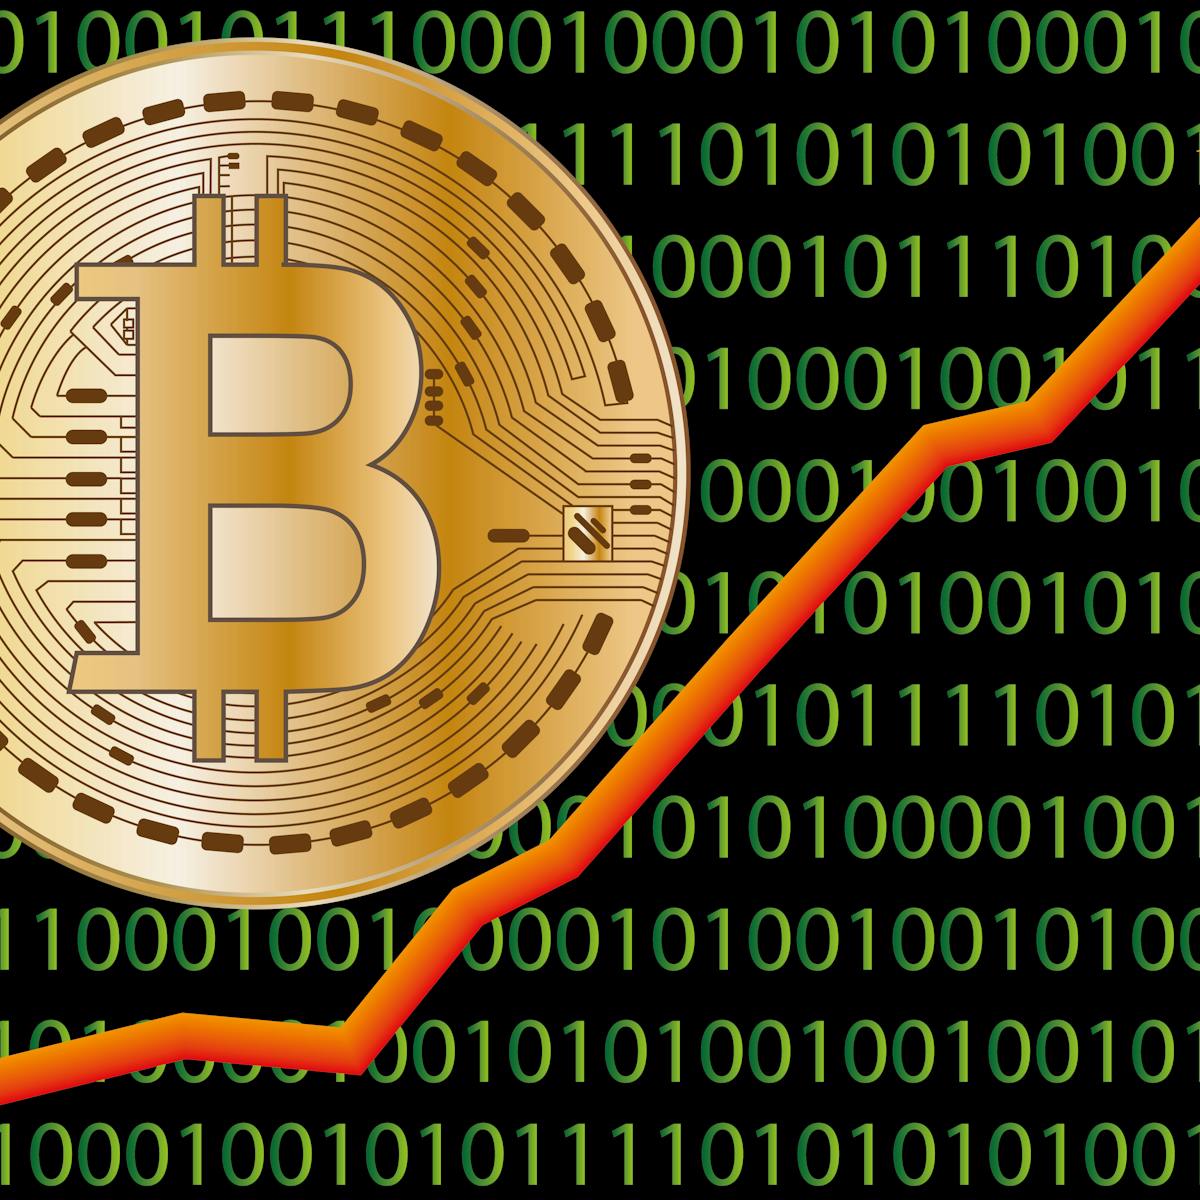 Bitcoin, investasi yang sangat spekulatif. Waspadai gelembung keuangan